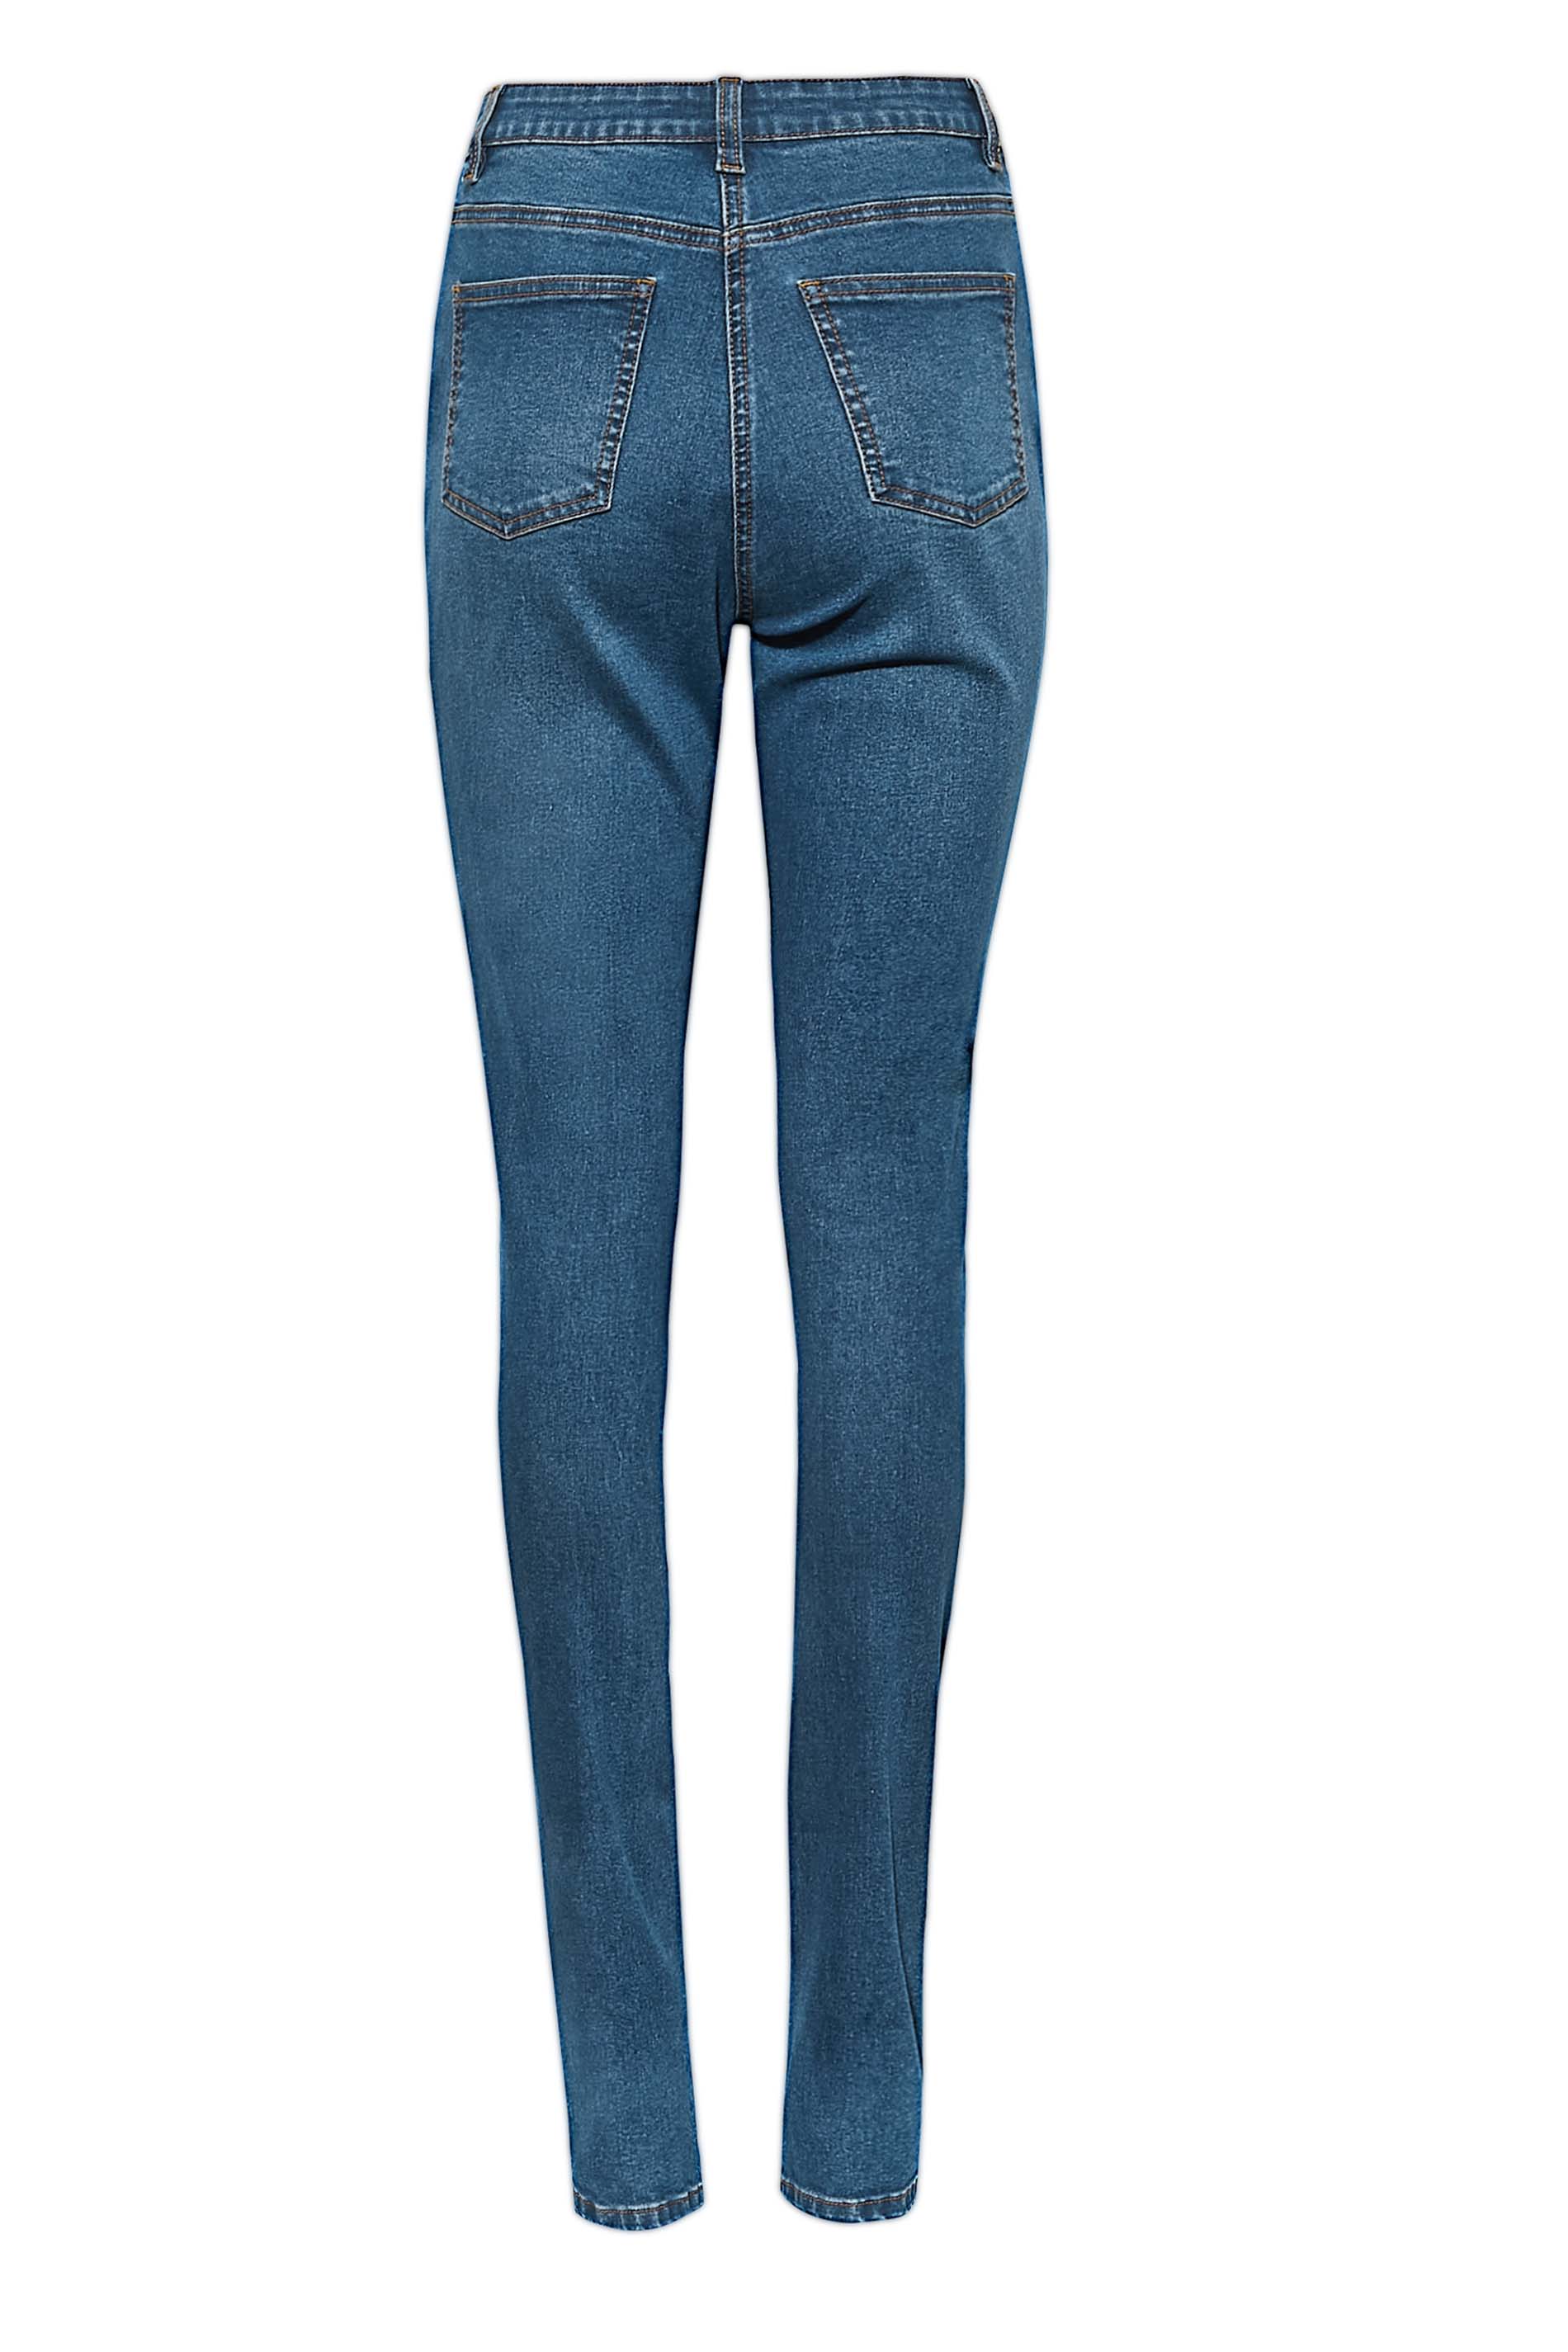 LTS Tall Women's Mid Blue Distressed AVA Skinny Jeans | Long Tall Sally 3